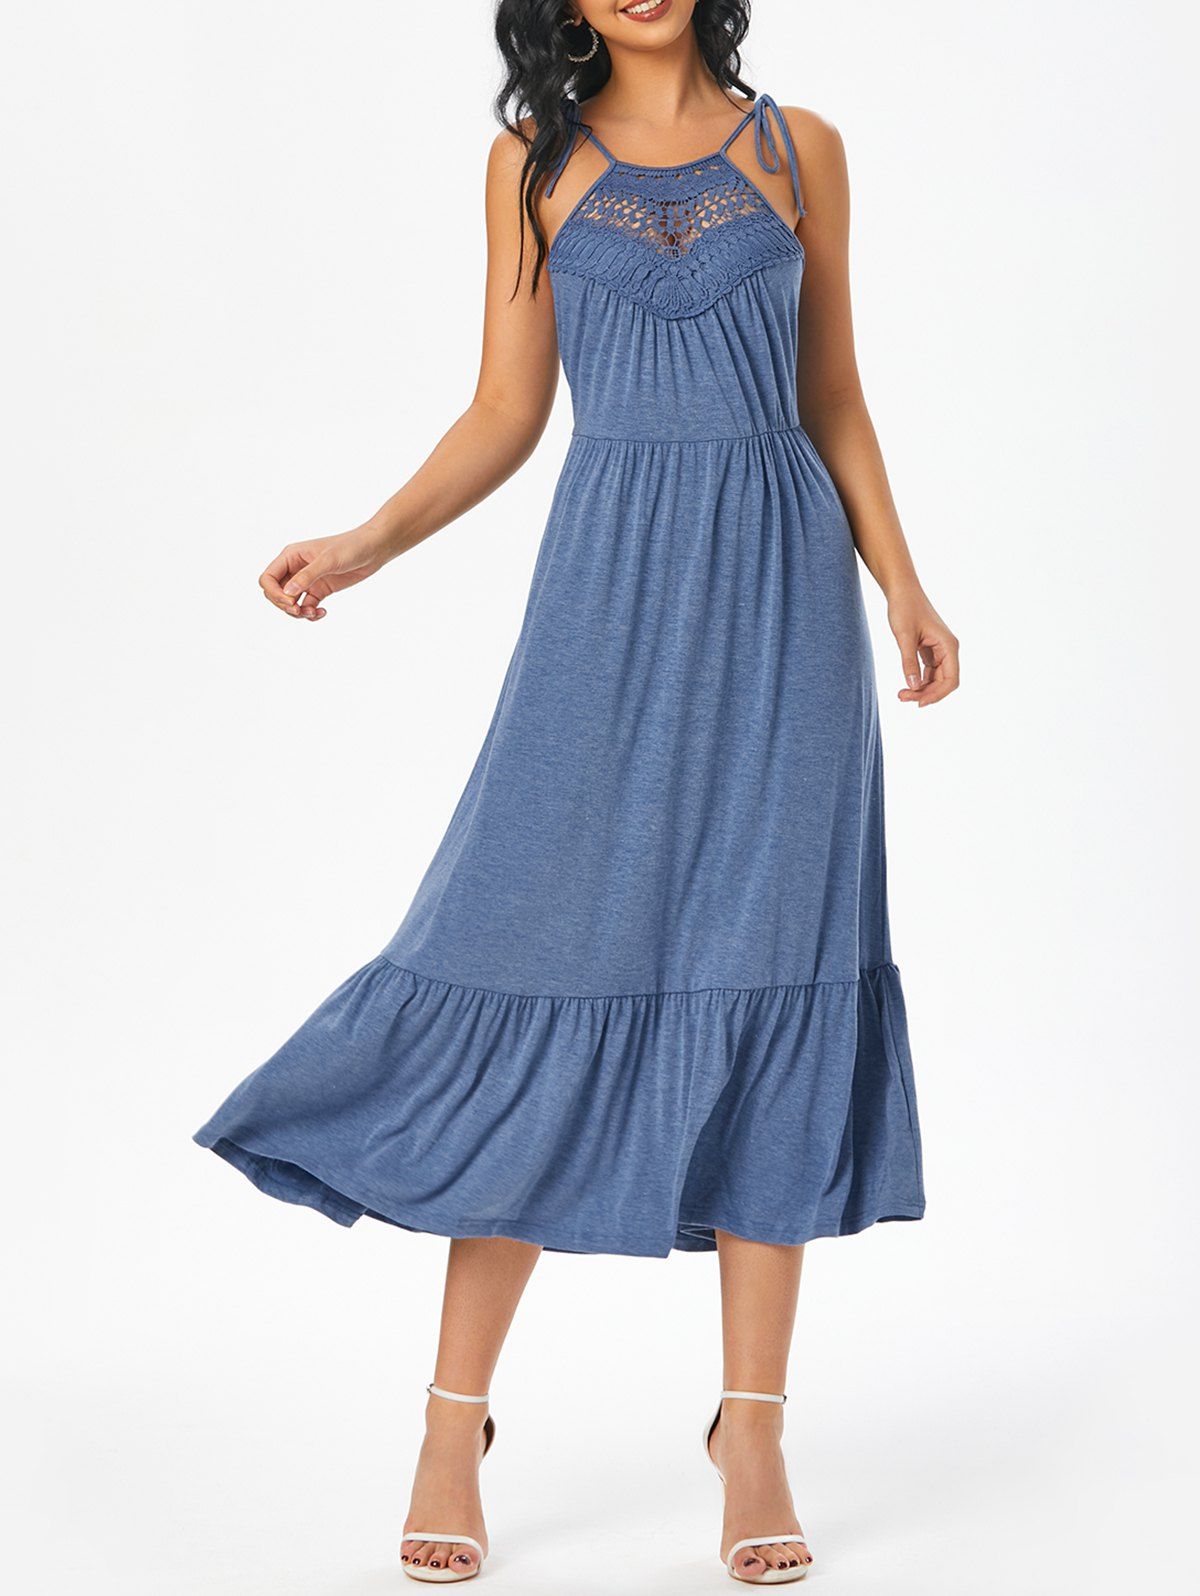 Crochet Lace Panel Maxi Dress Tie Spaghetti Strap A Line Dress Flounce Hem Sleeveless Long Dress - BLUE M